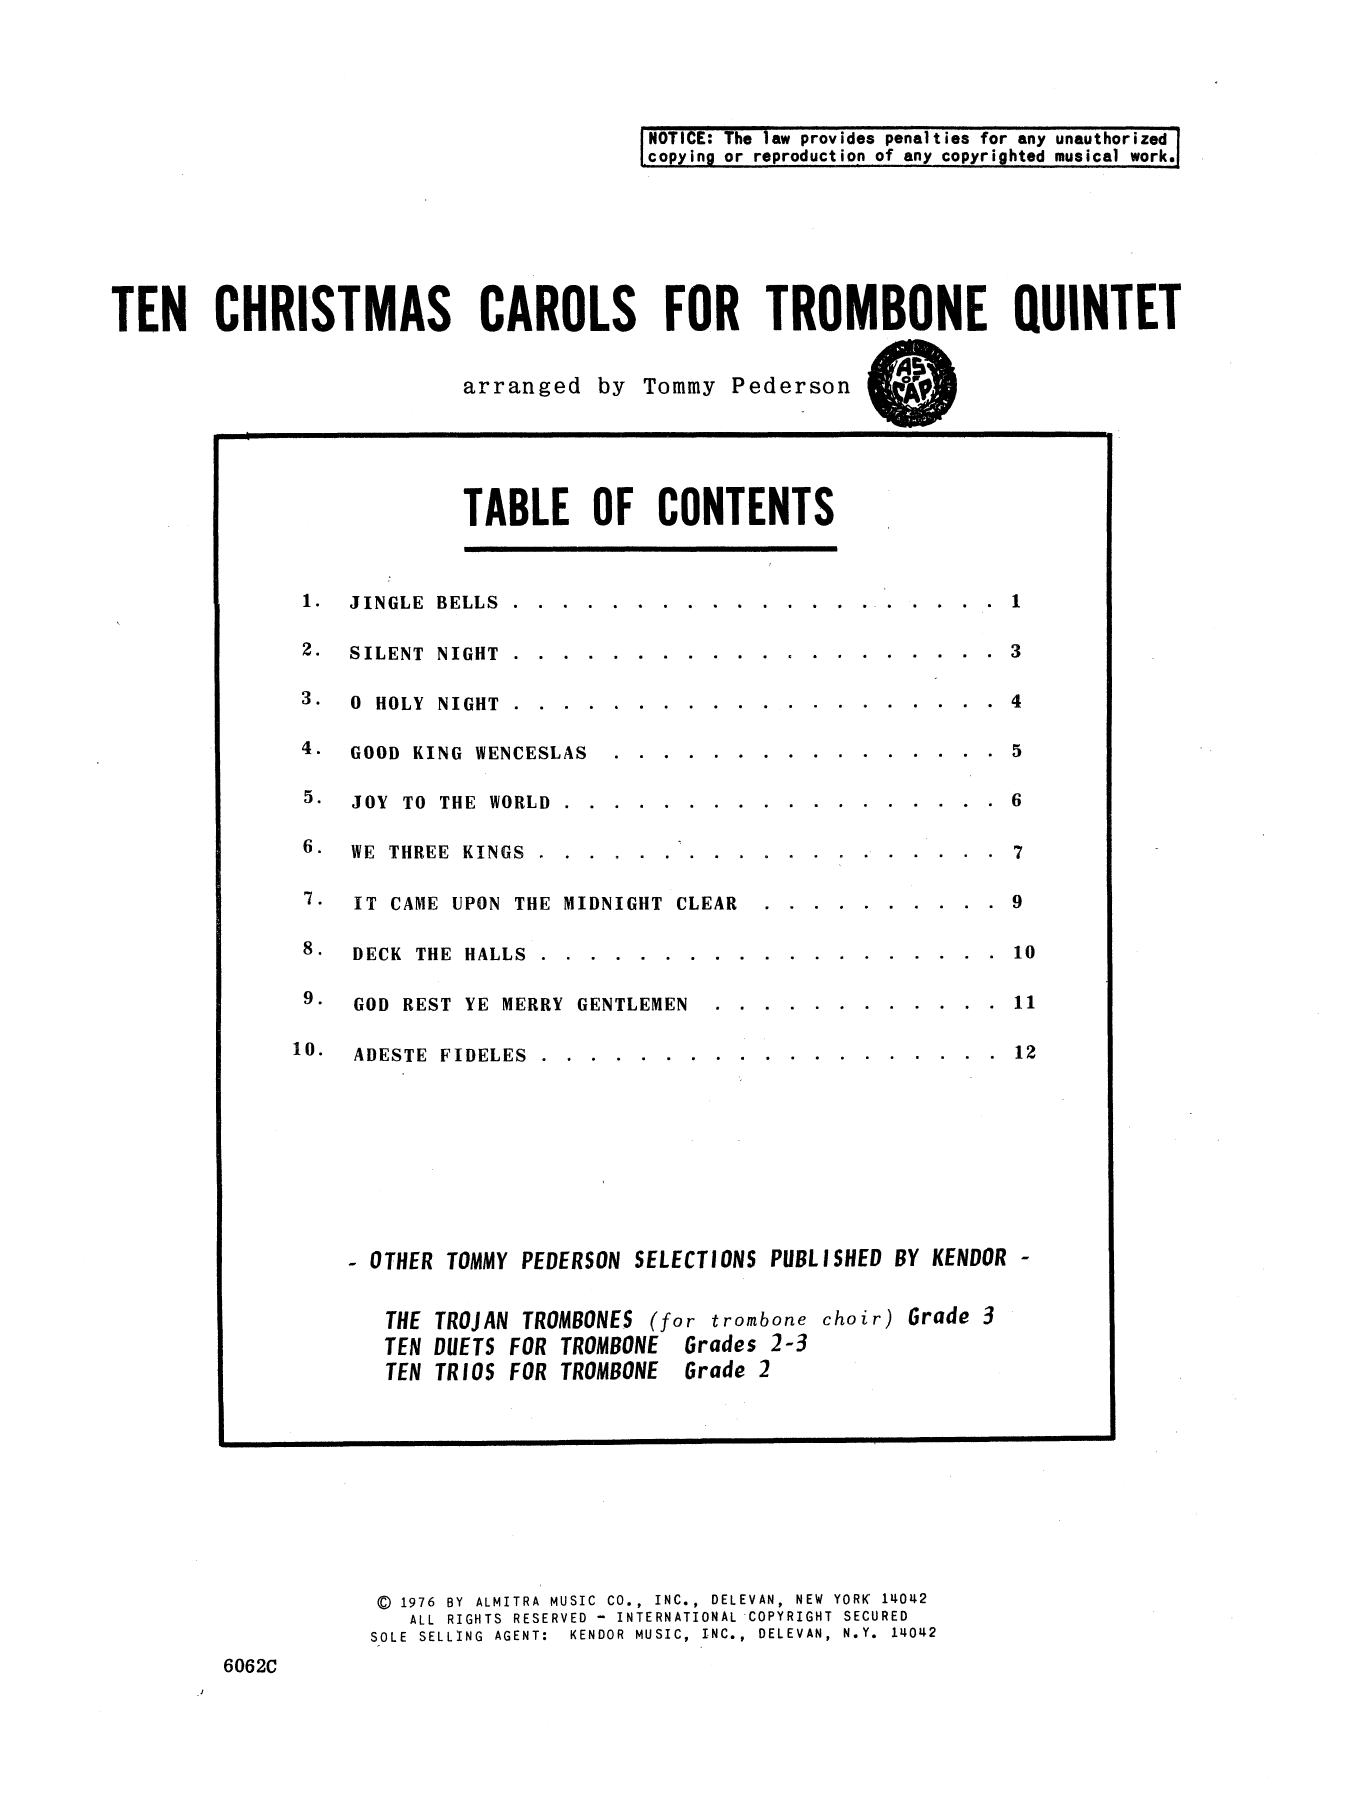 Download Tommy Pederson Ten Christmas Carols For Trombone Quint Sheet Music